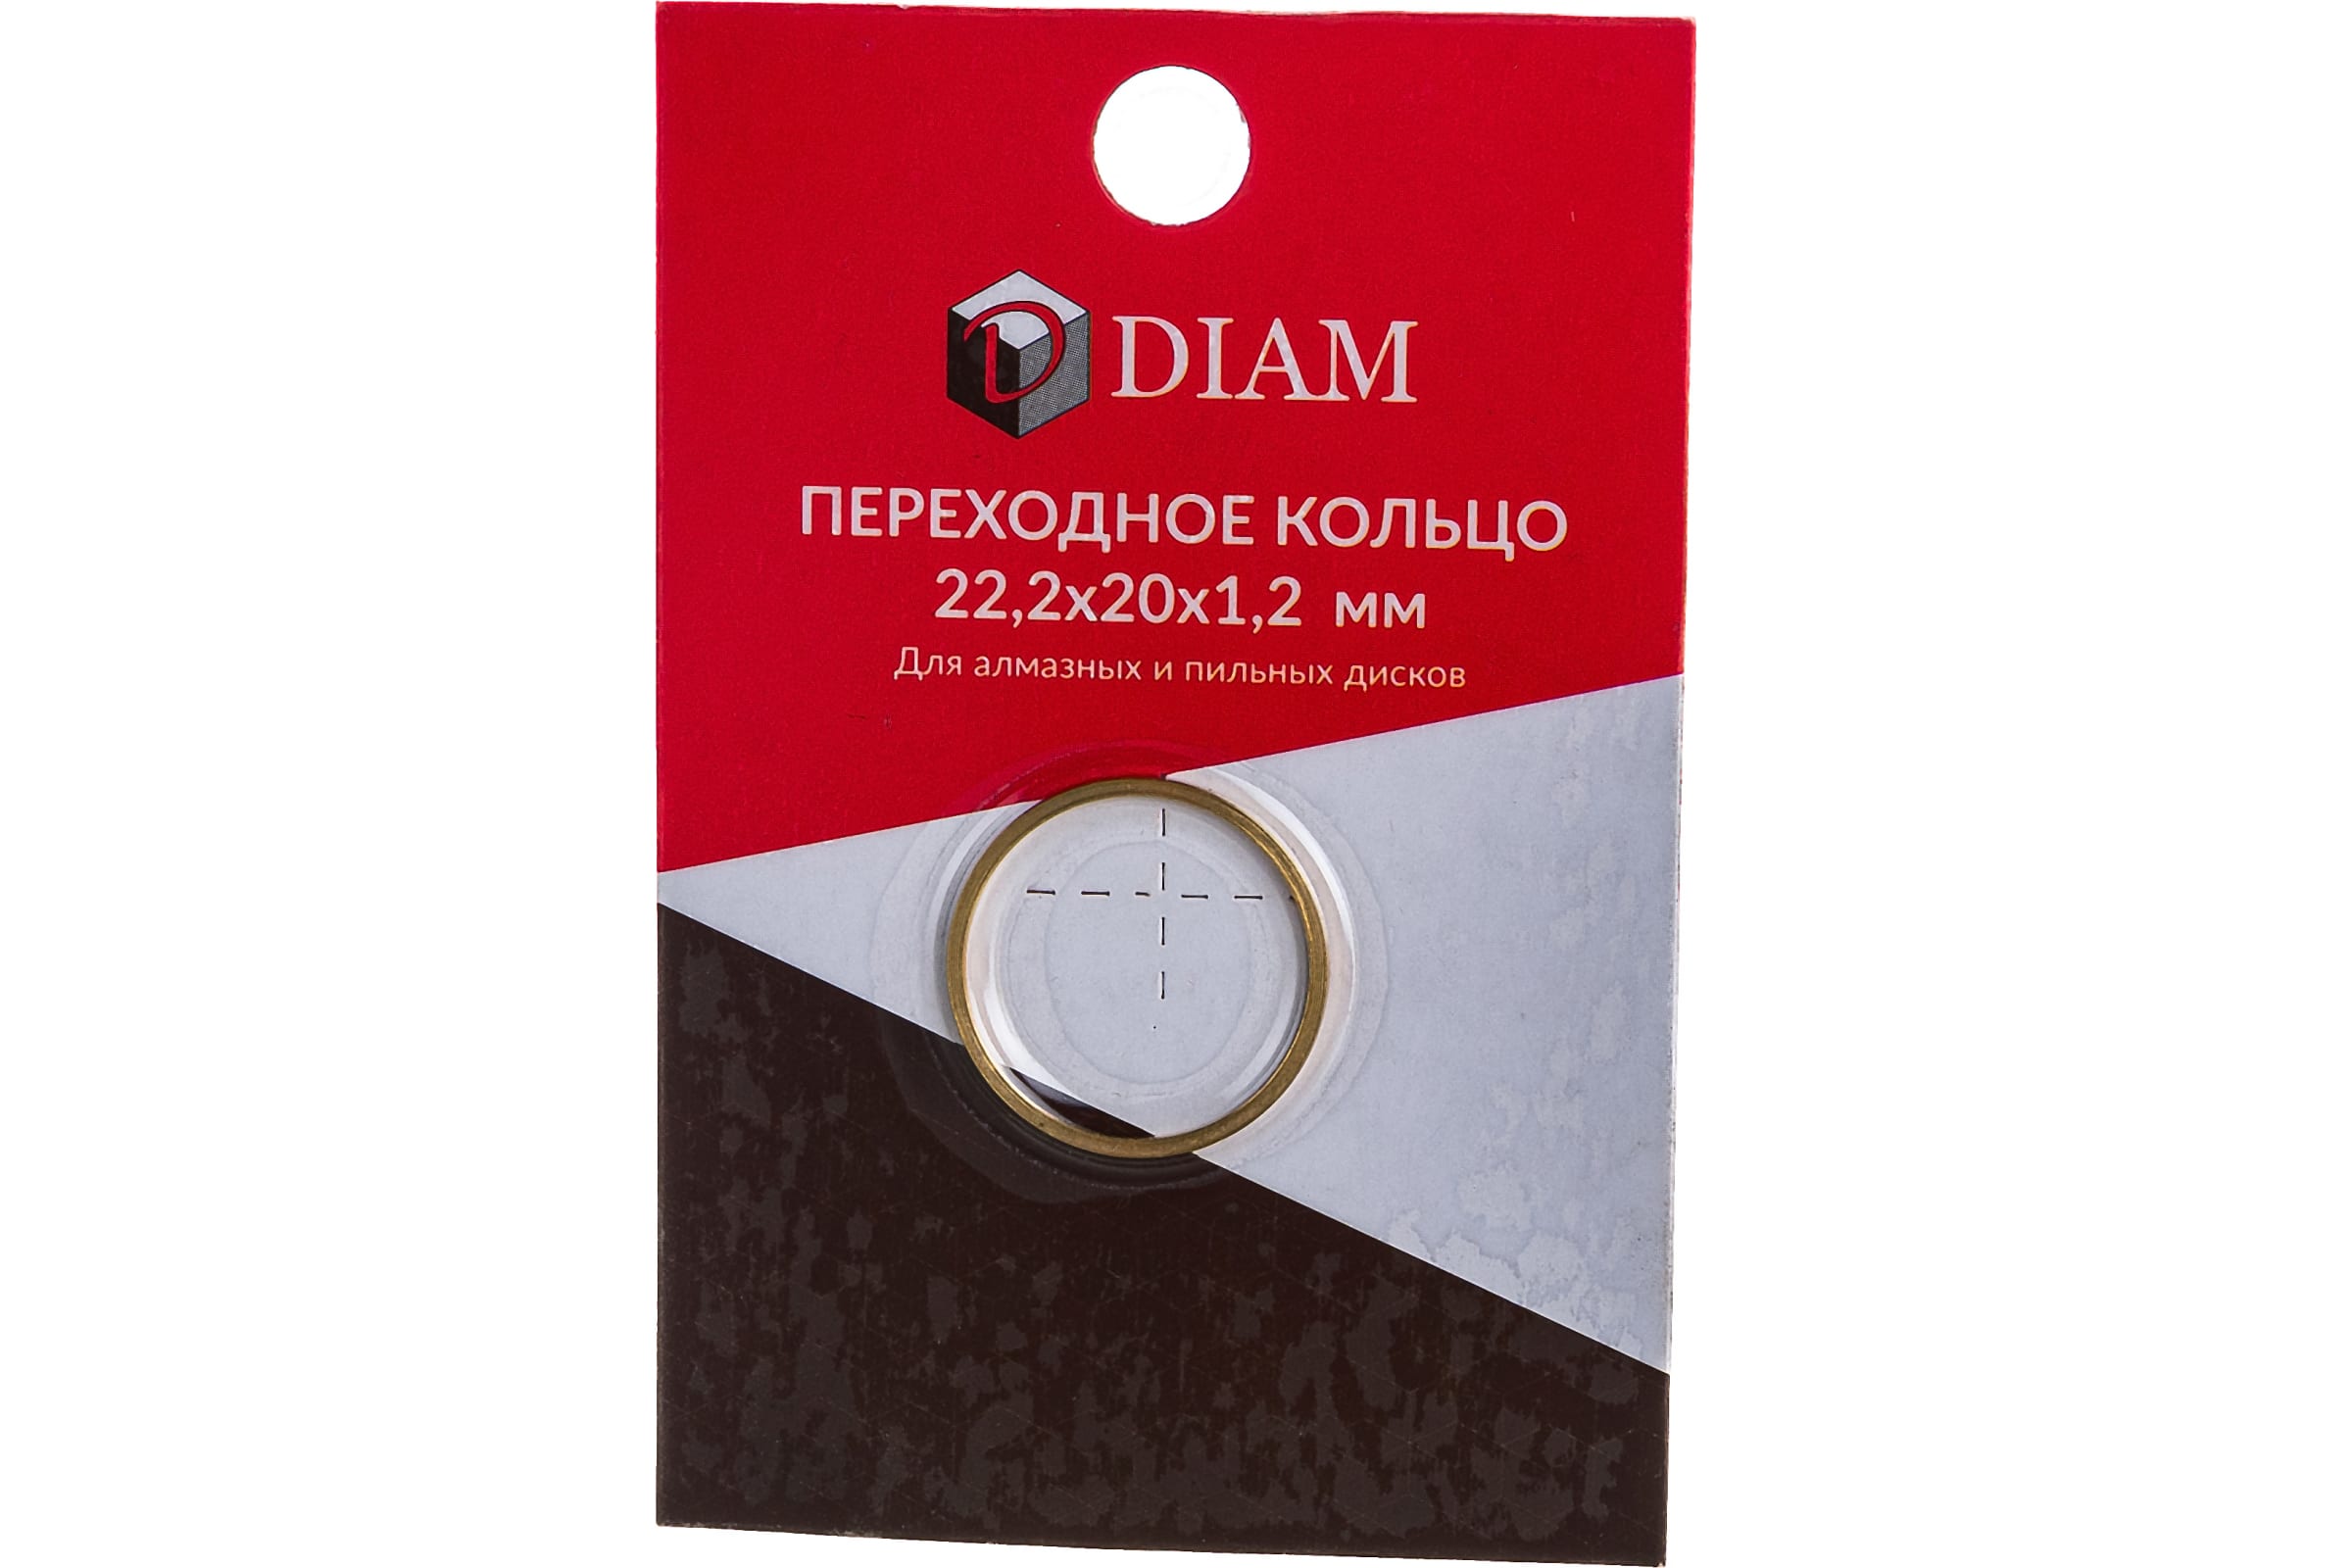 DIAM Переходное кольцо 22,2х20х1,2 640082 diam переходное кольцо 22 2х20х1 2 640082